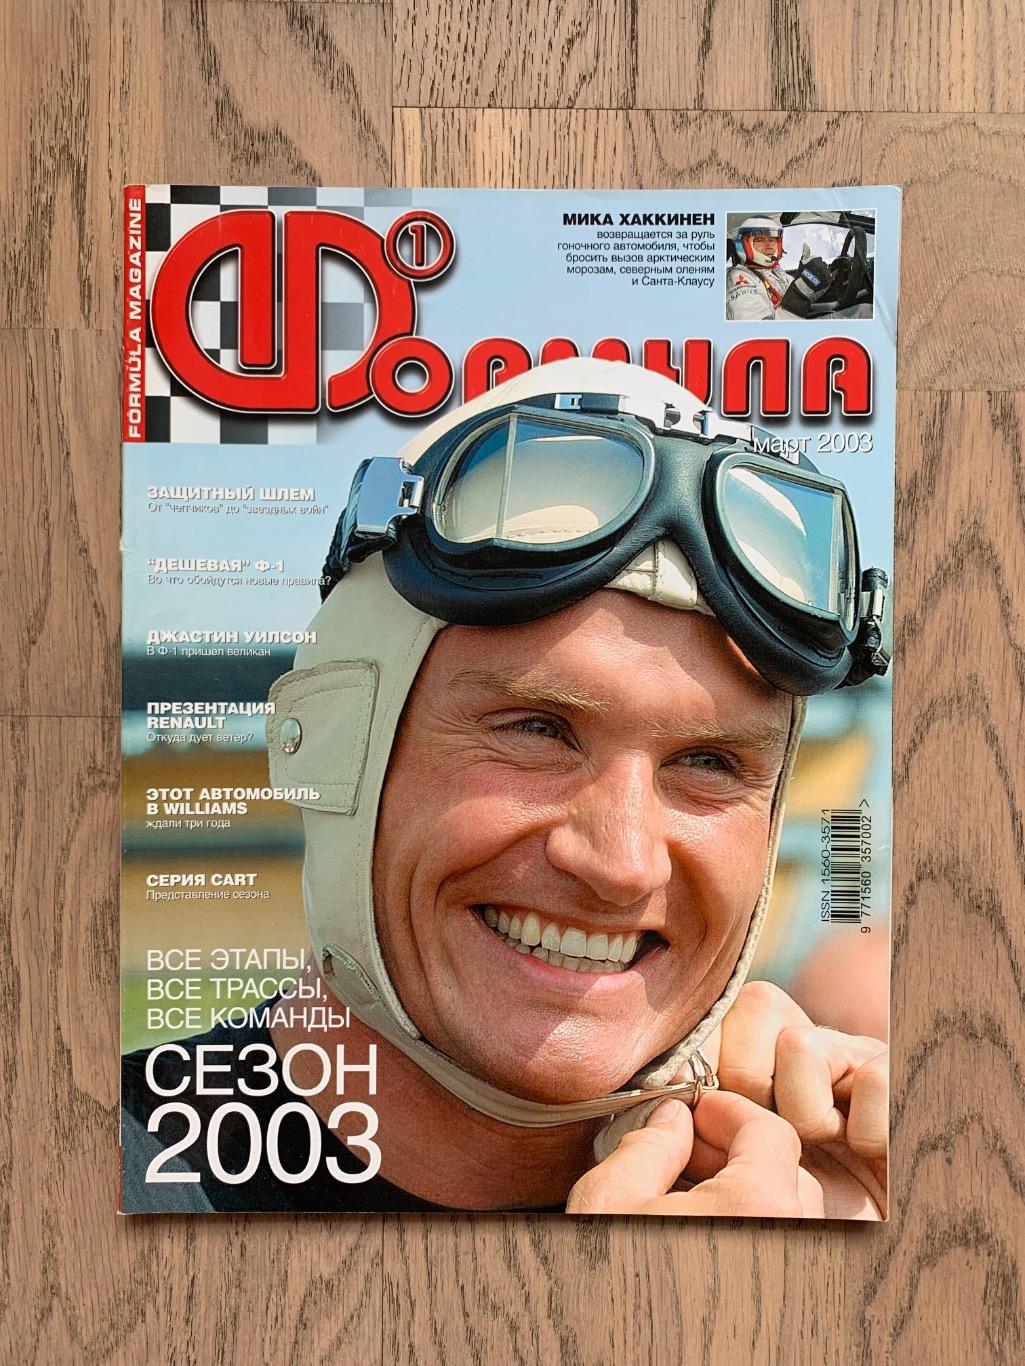 Журнал Формула 1 (Formula Magazine) / март 2003